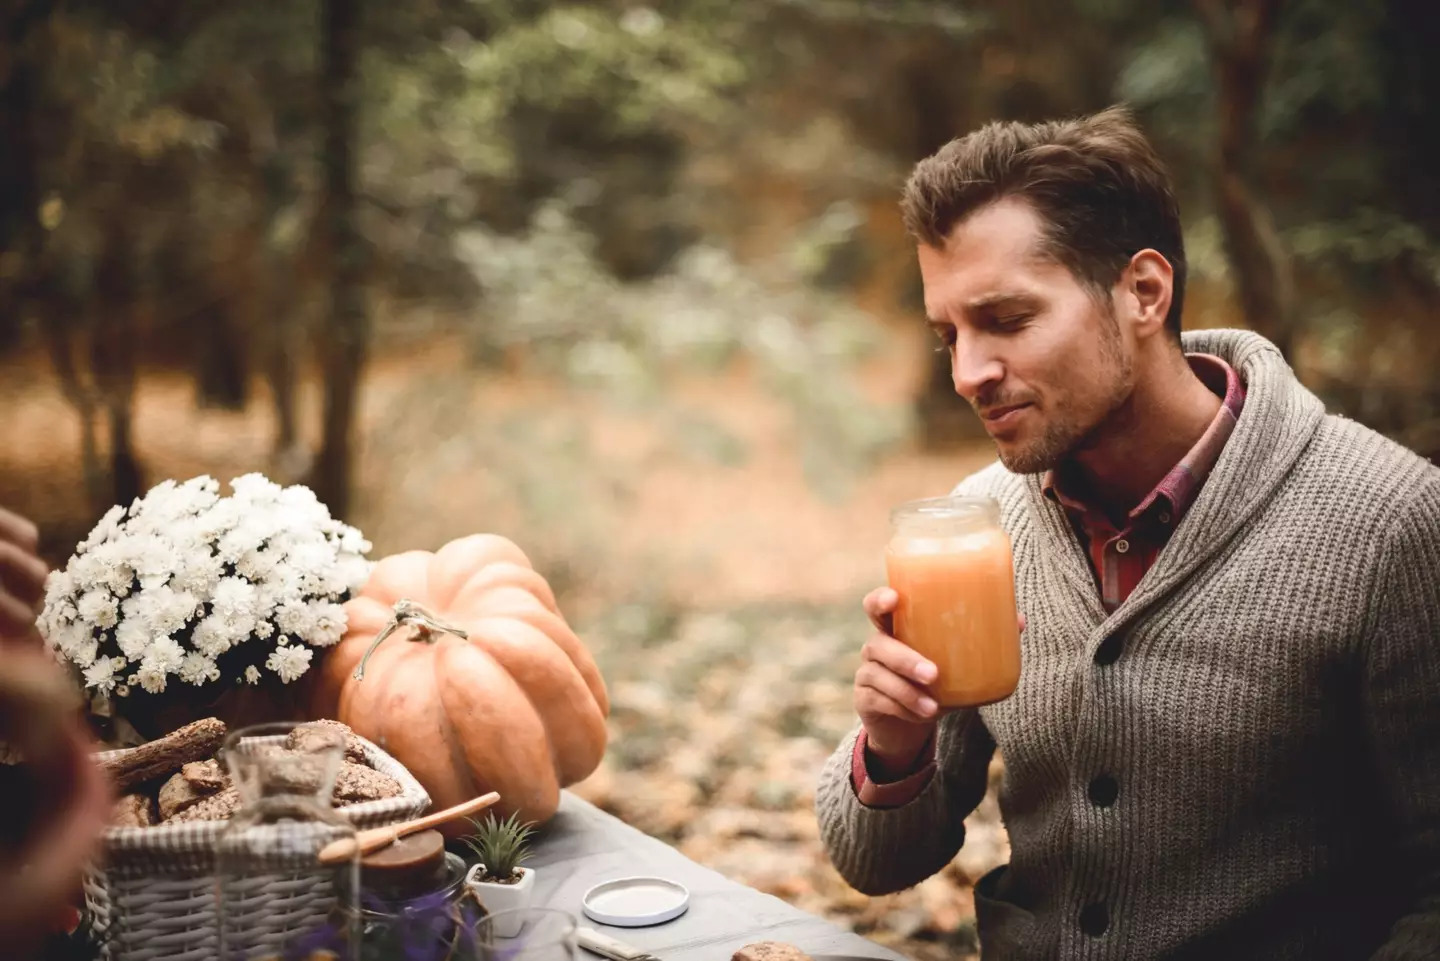 Just a dude enjoying some non-magical pumpkin juice.